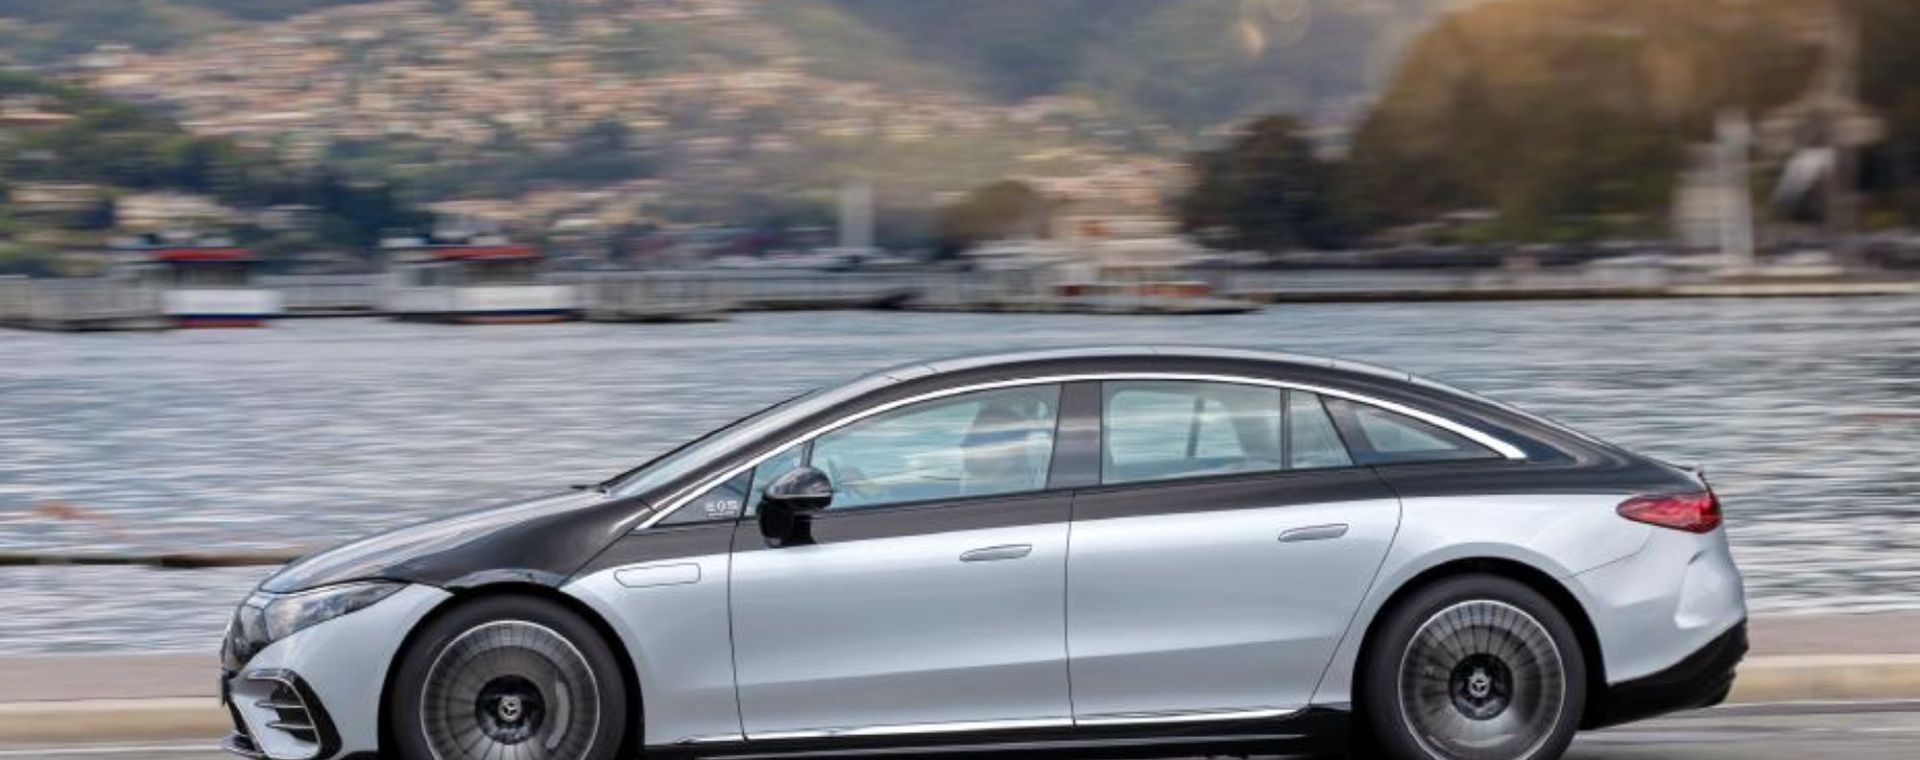 The 2022 Mercedes-Benz EQS electric sedan driving on a highway near docks